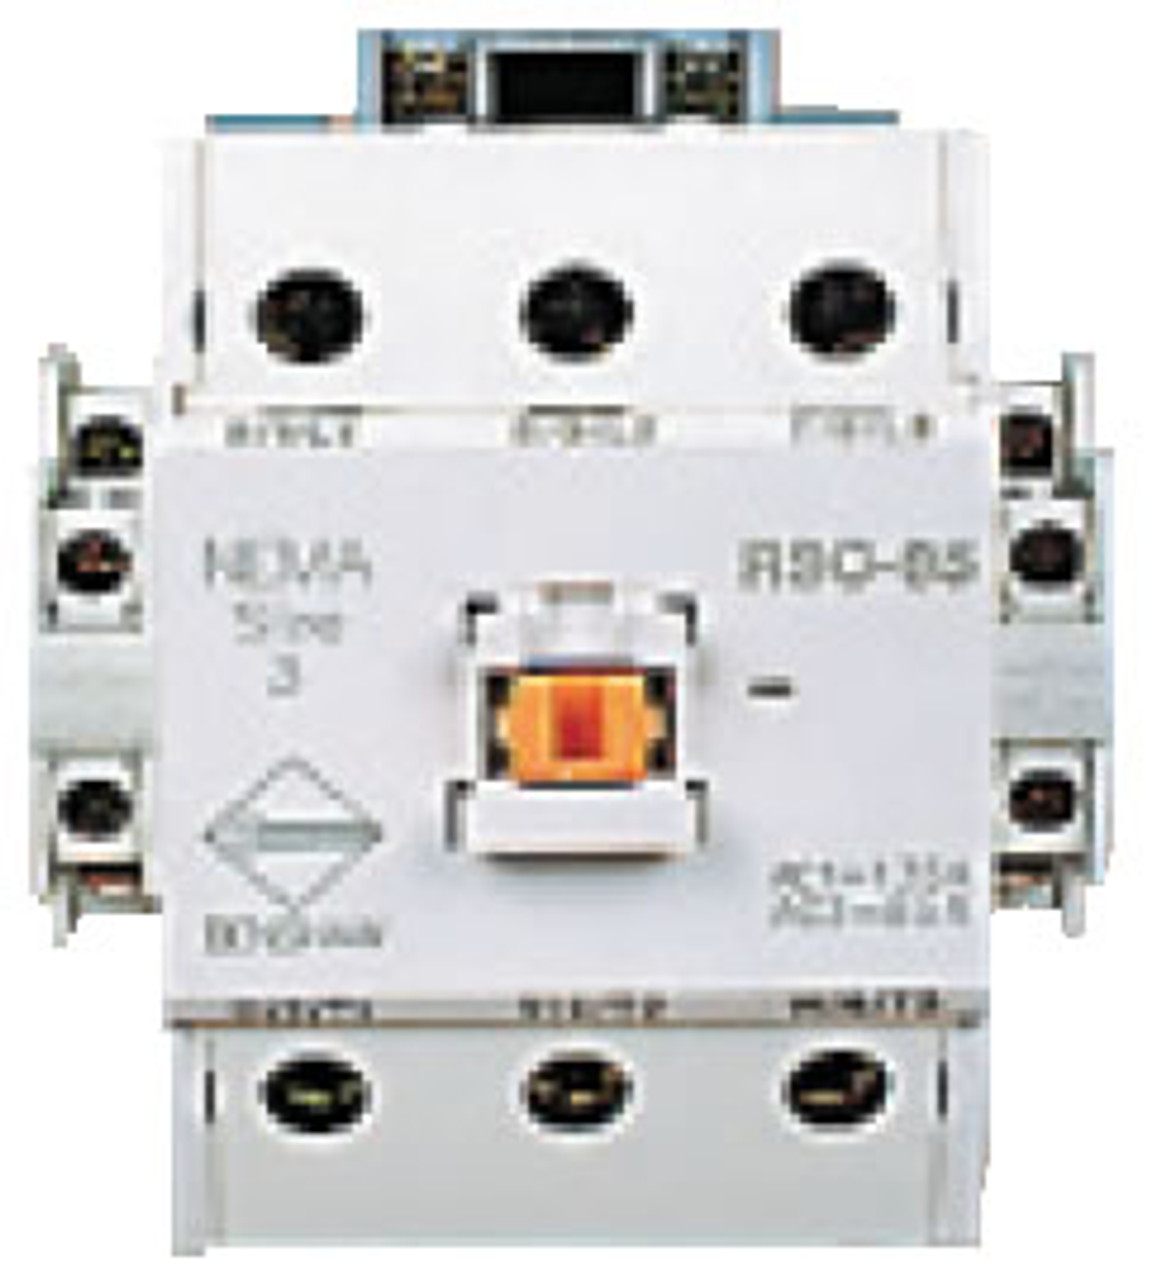 Benshaw RSC-85-6AC120 contactor